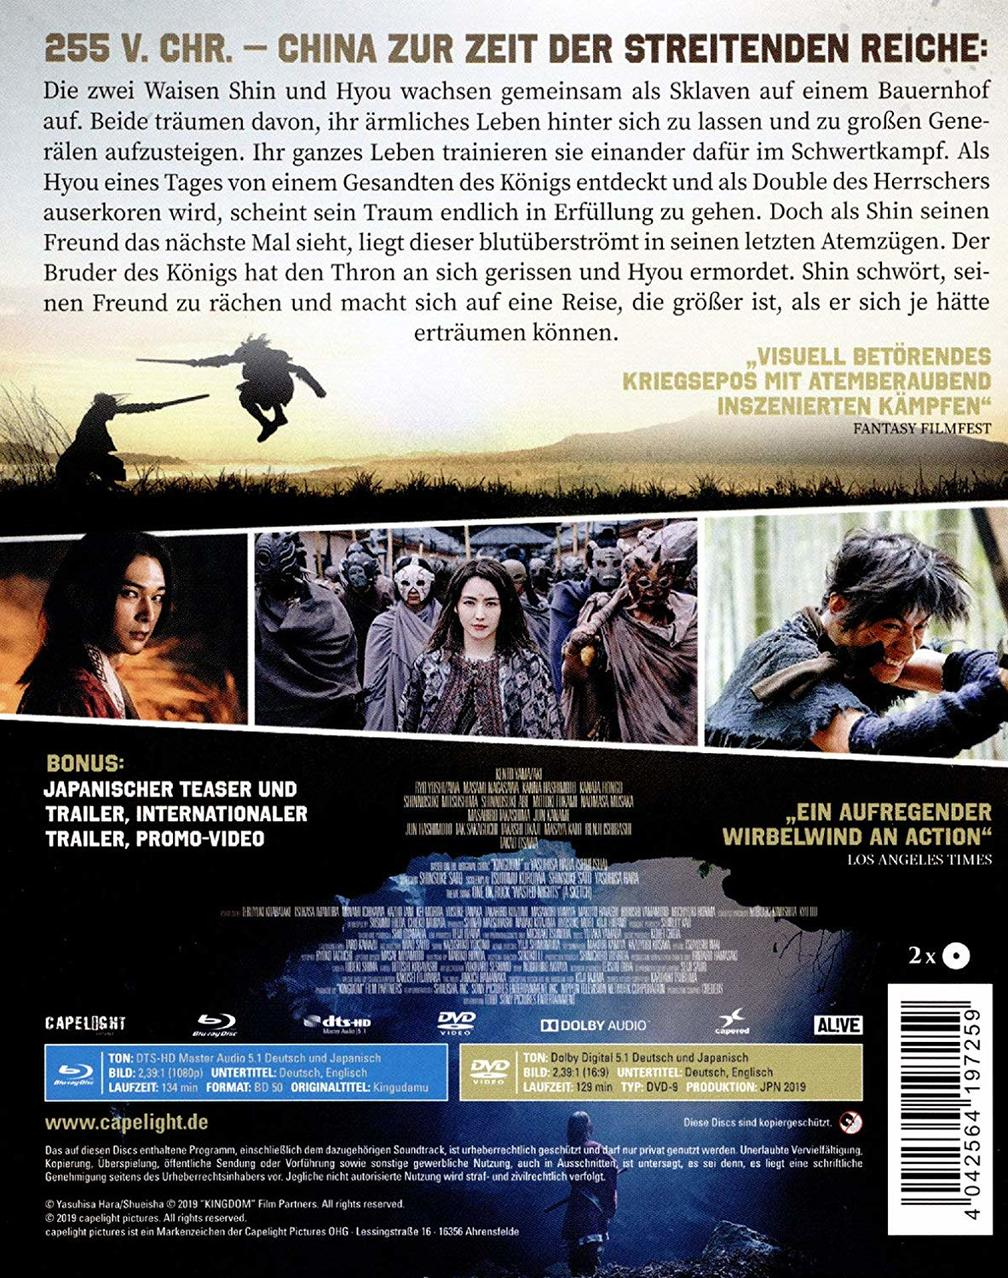 + (Blu-Ray) Blu-ray DVD Kingdom-2-Disc SteelBook